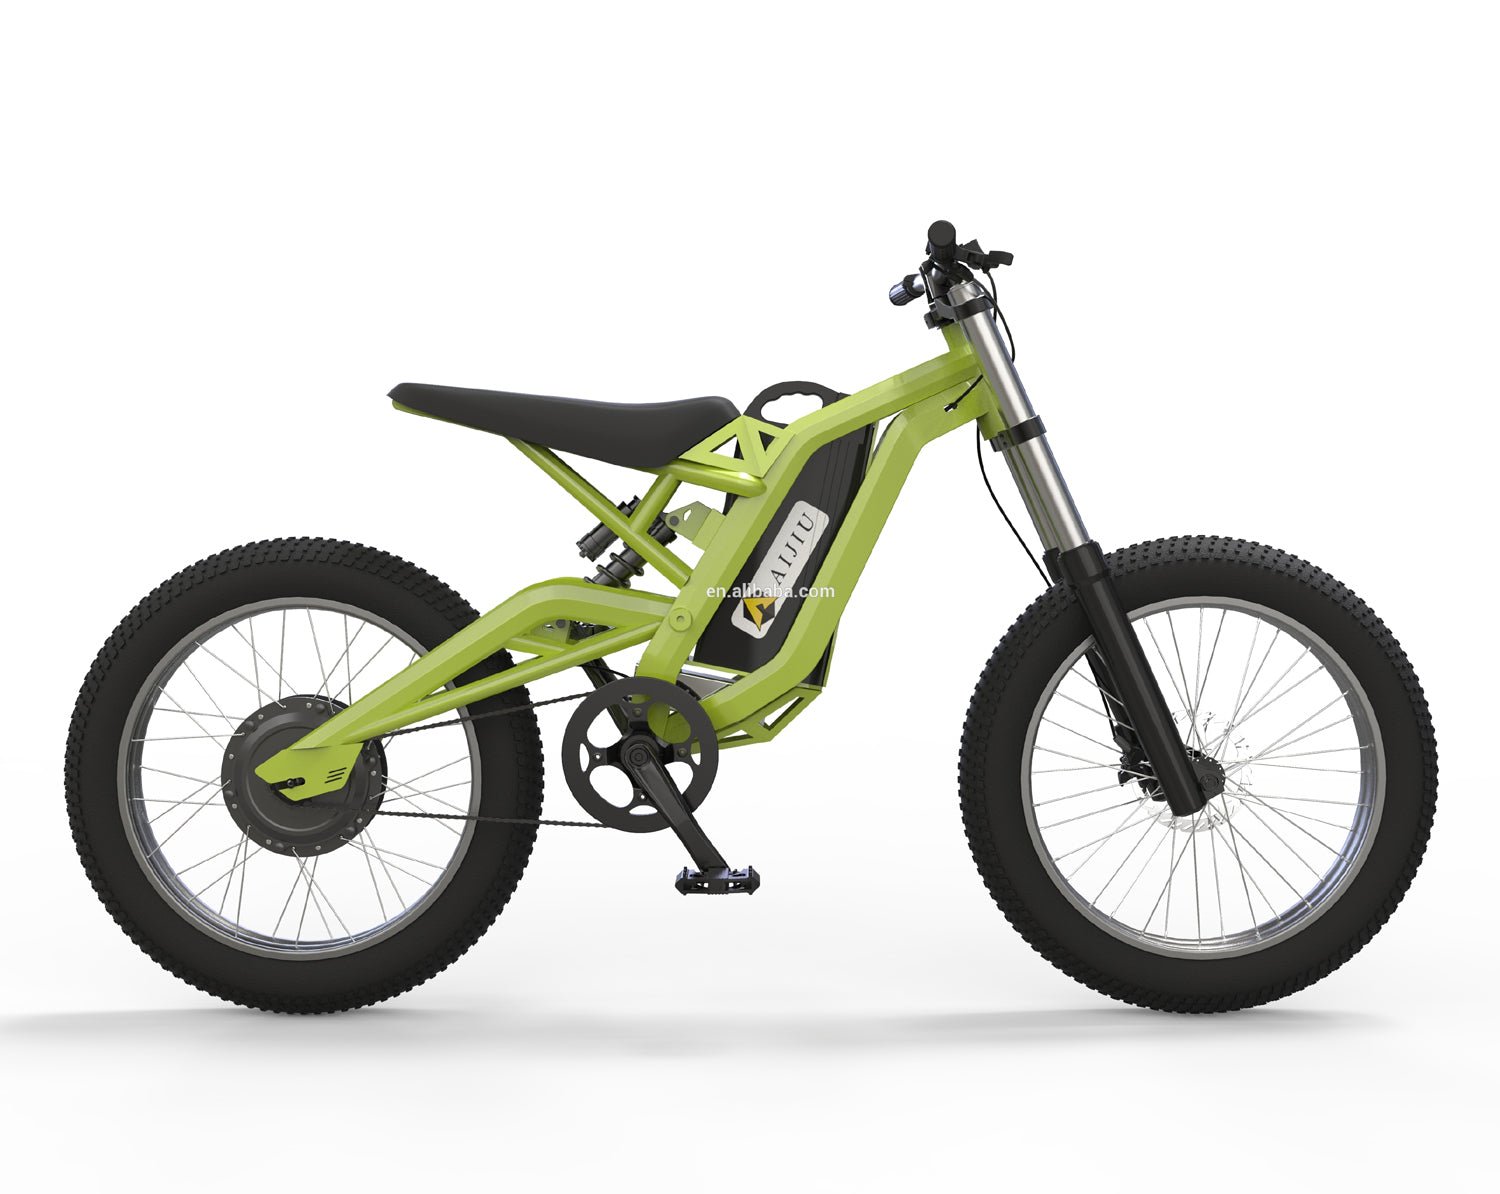 48V 500W 750W 1000W electric sportbike fast sport bike motorcycles electric dirt bike with patent design | Electrr Inc